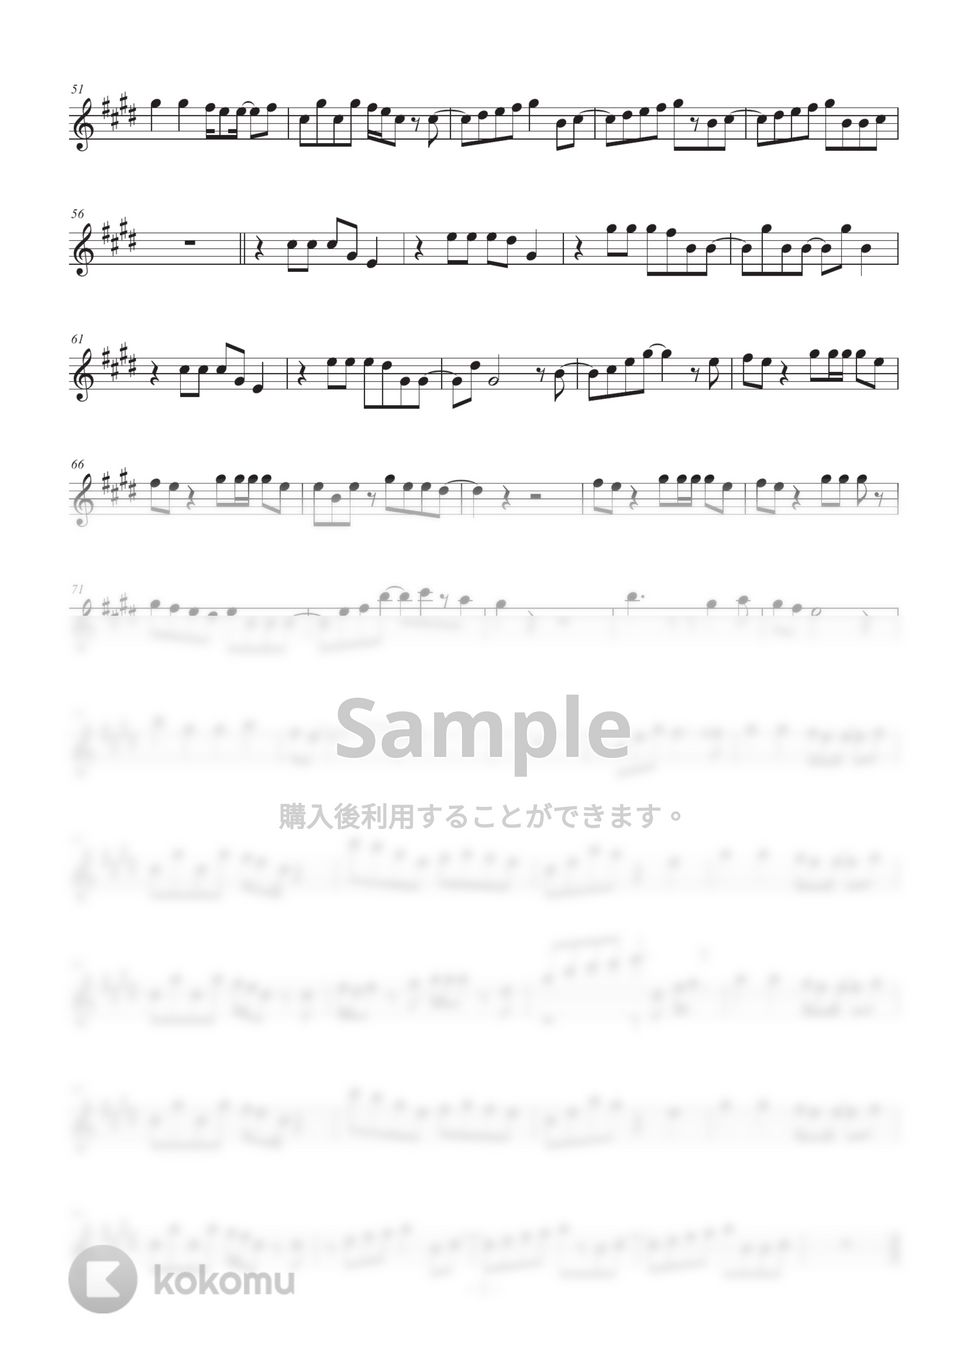 Reol - 第六感(inE♭) by HiRO Sax